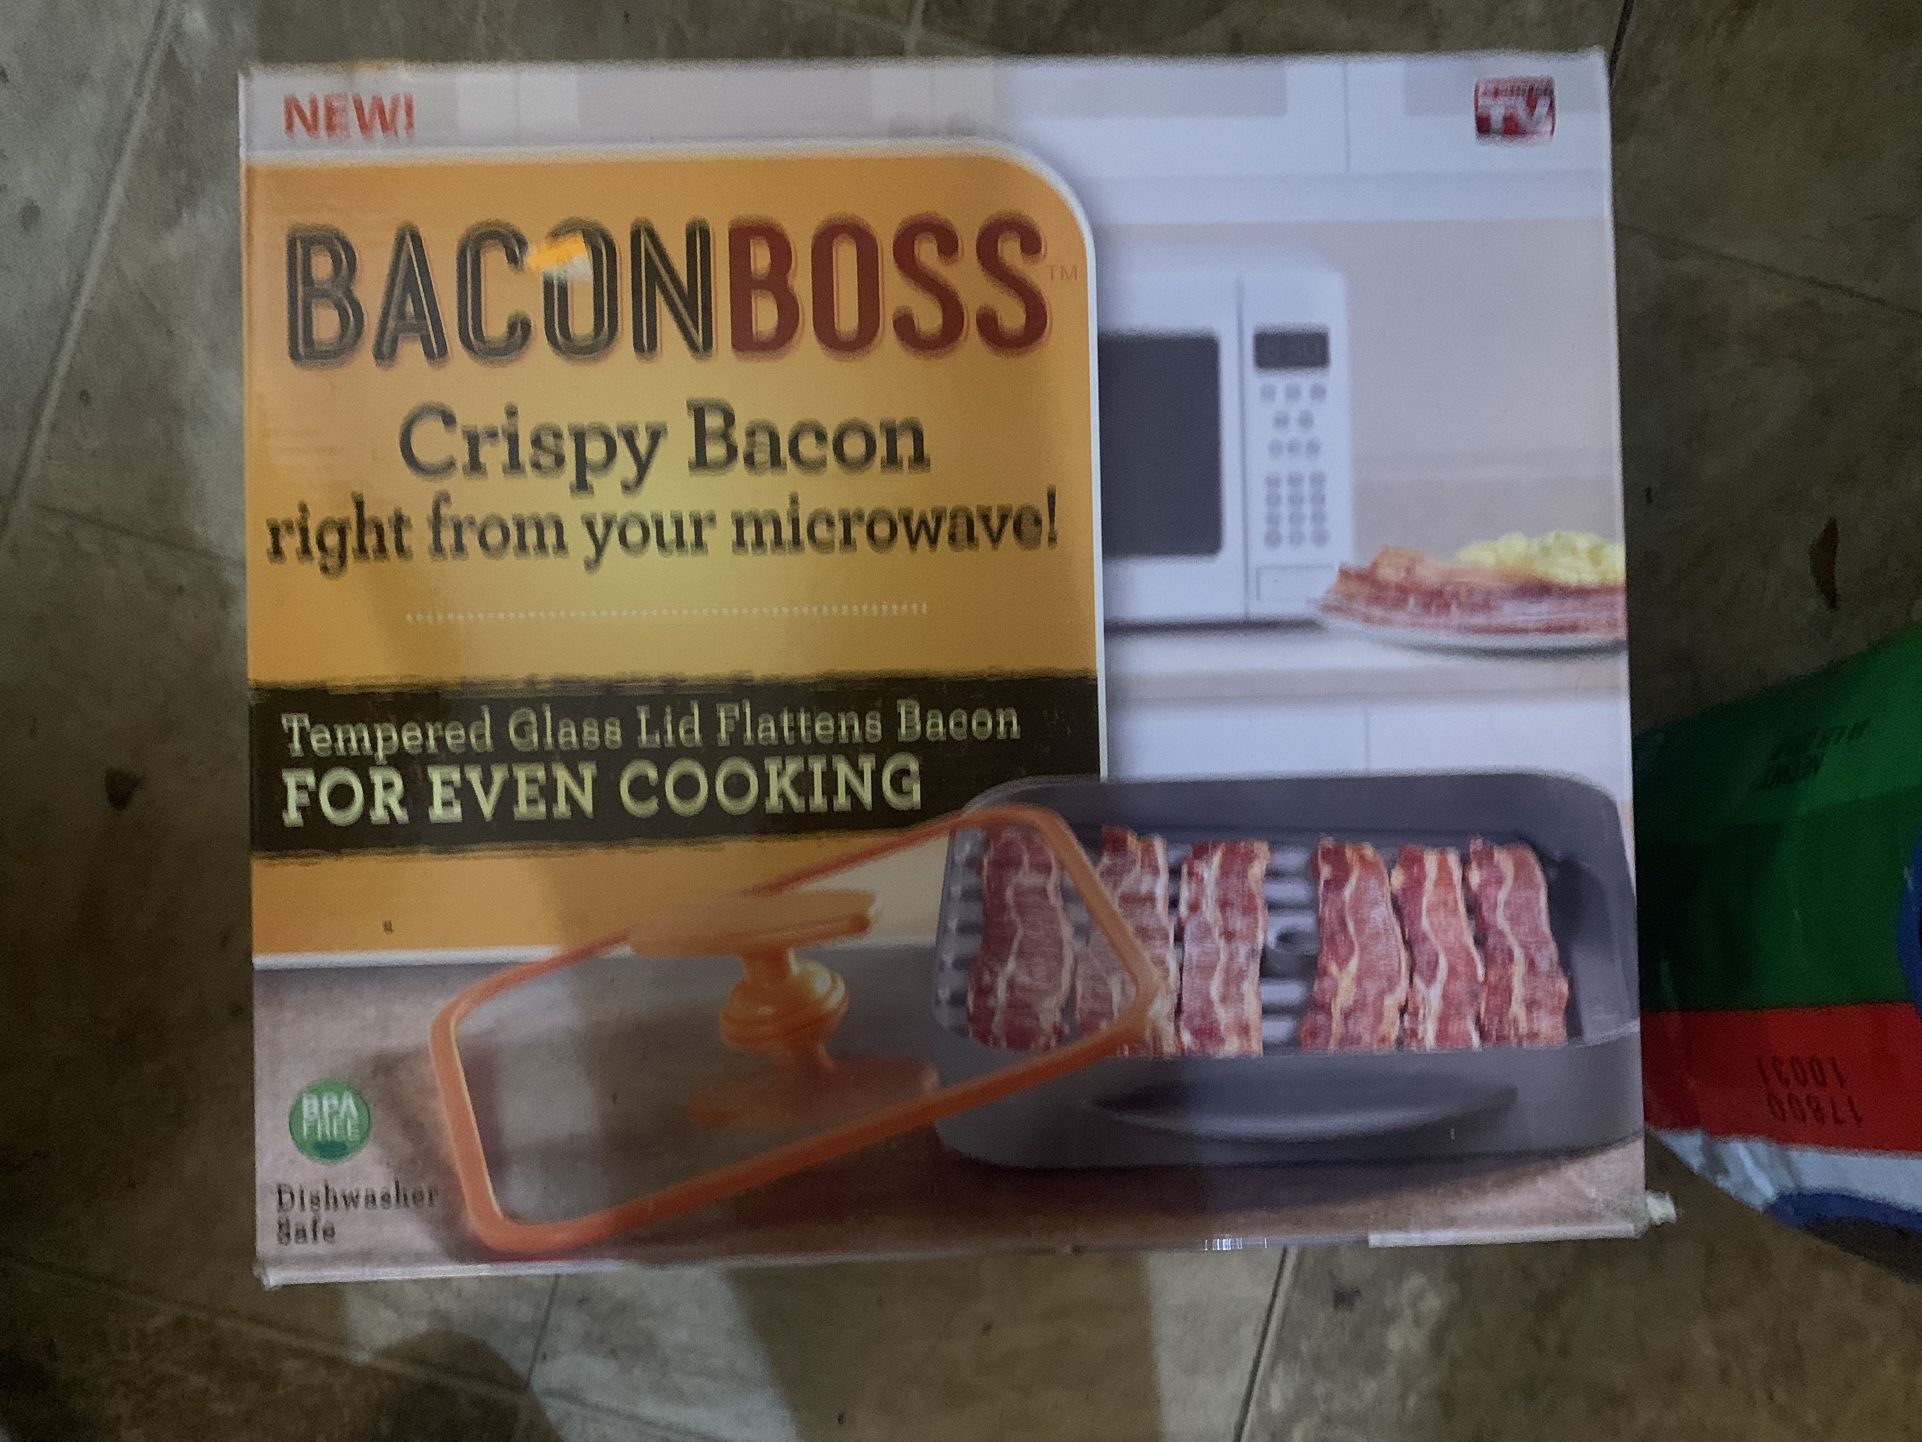 Bacon Boss